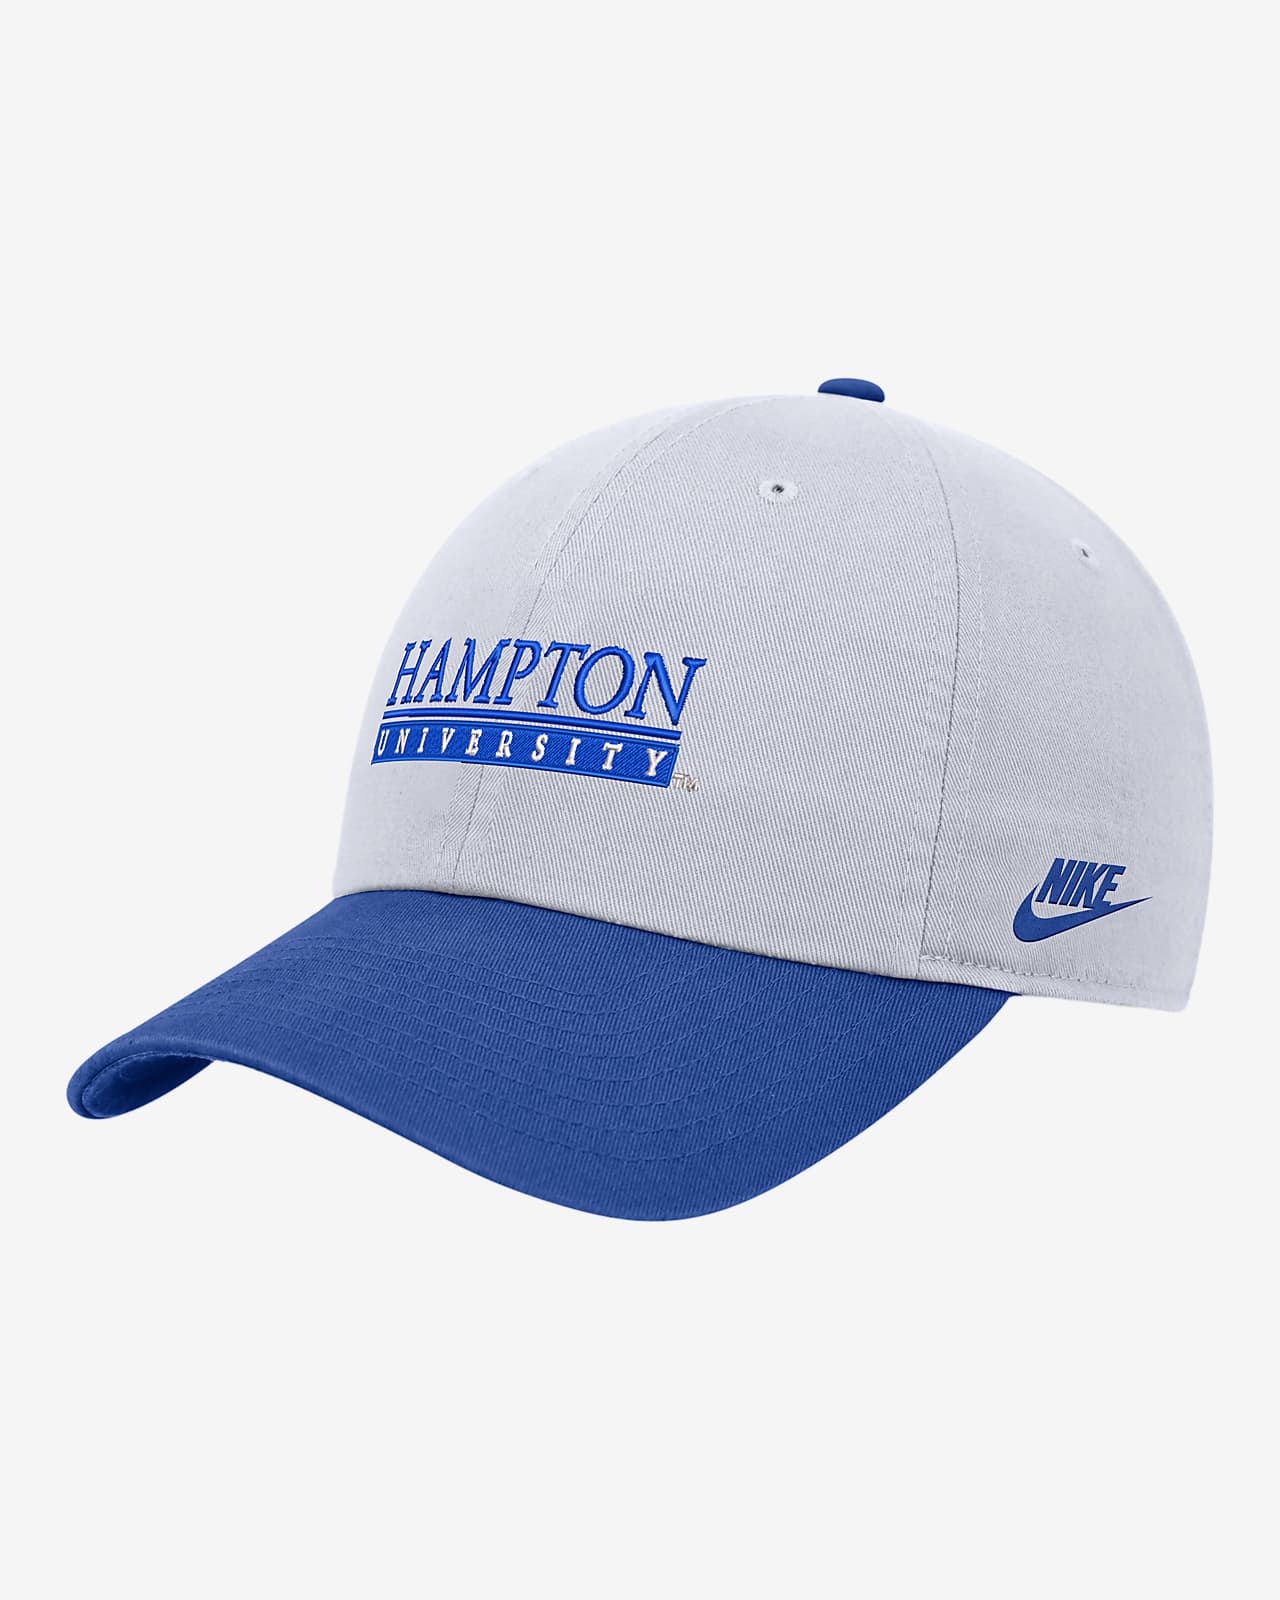 Gorra universitaria Nike ajustable Hampton